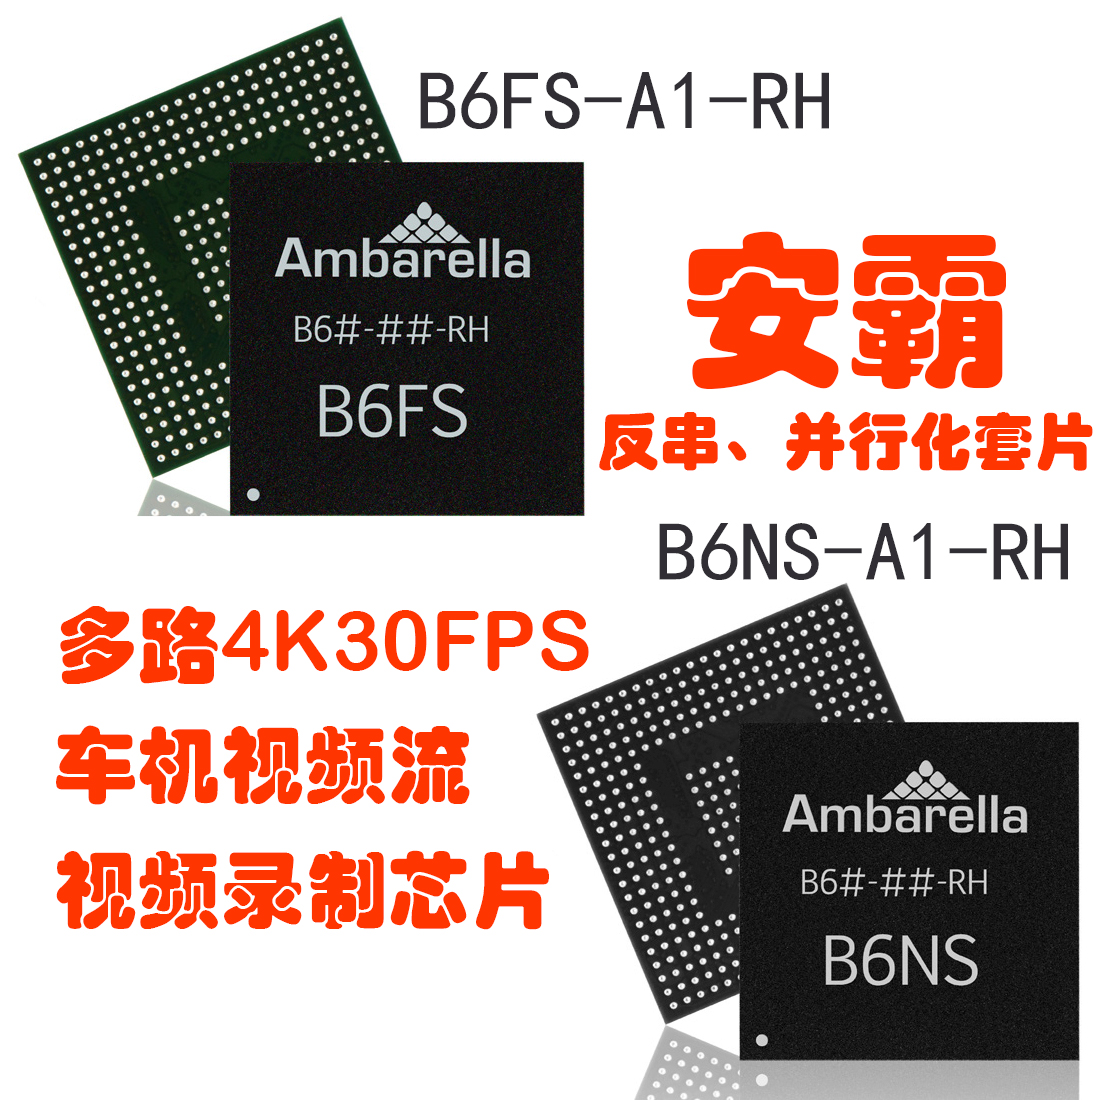 B6NS，B6FS，反串行化芯片，串行化套片，串并转换芯片，Ambarella，安霸，汽车机用高性能，HD,4K30FPS，无延迟，多视频流，视频录制处理器